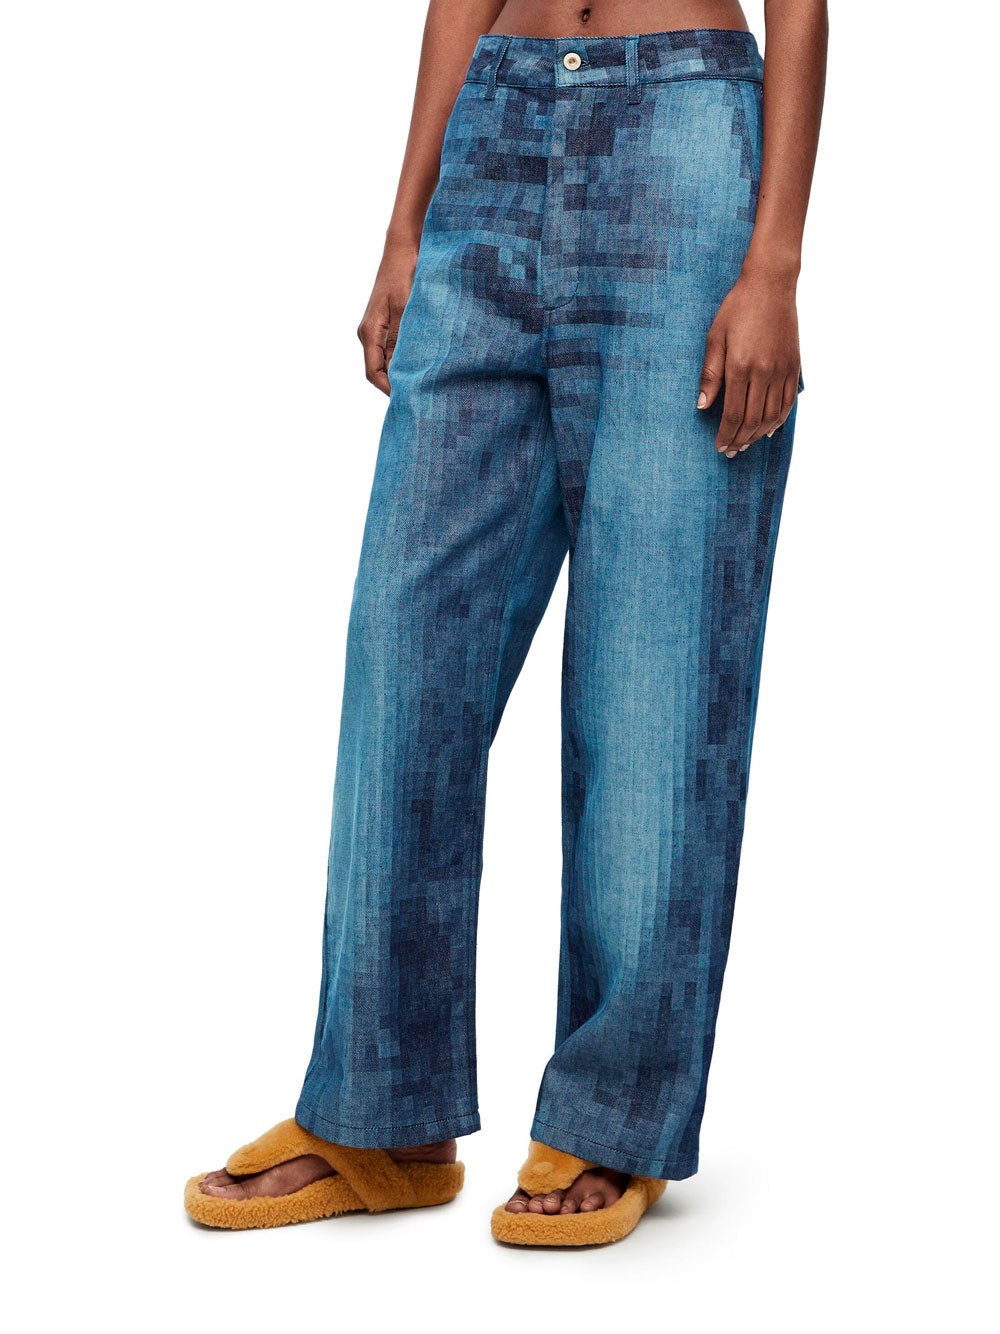 Pixelated jeans